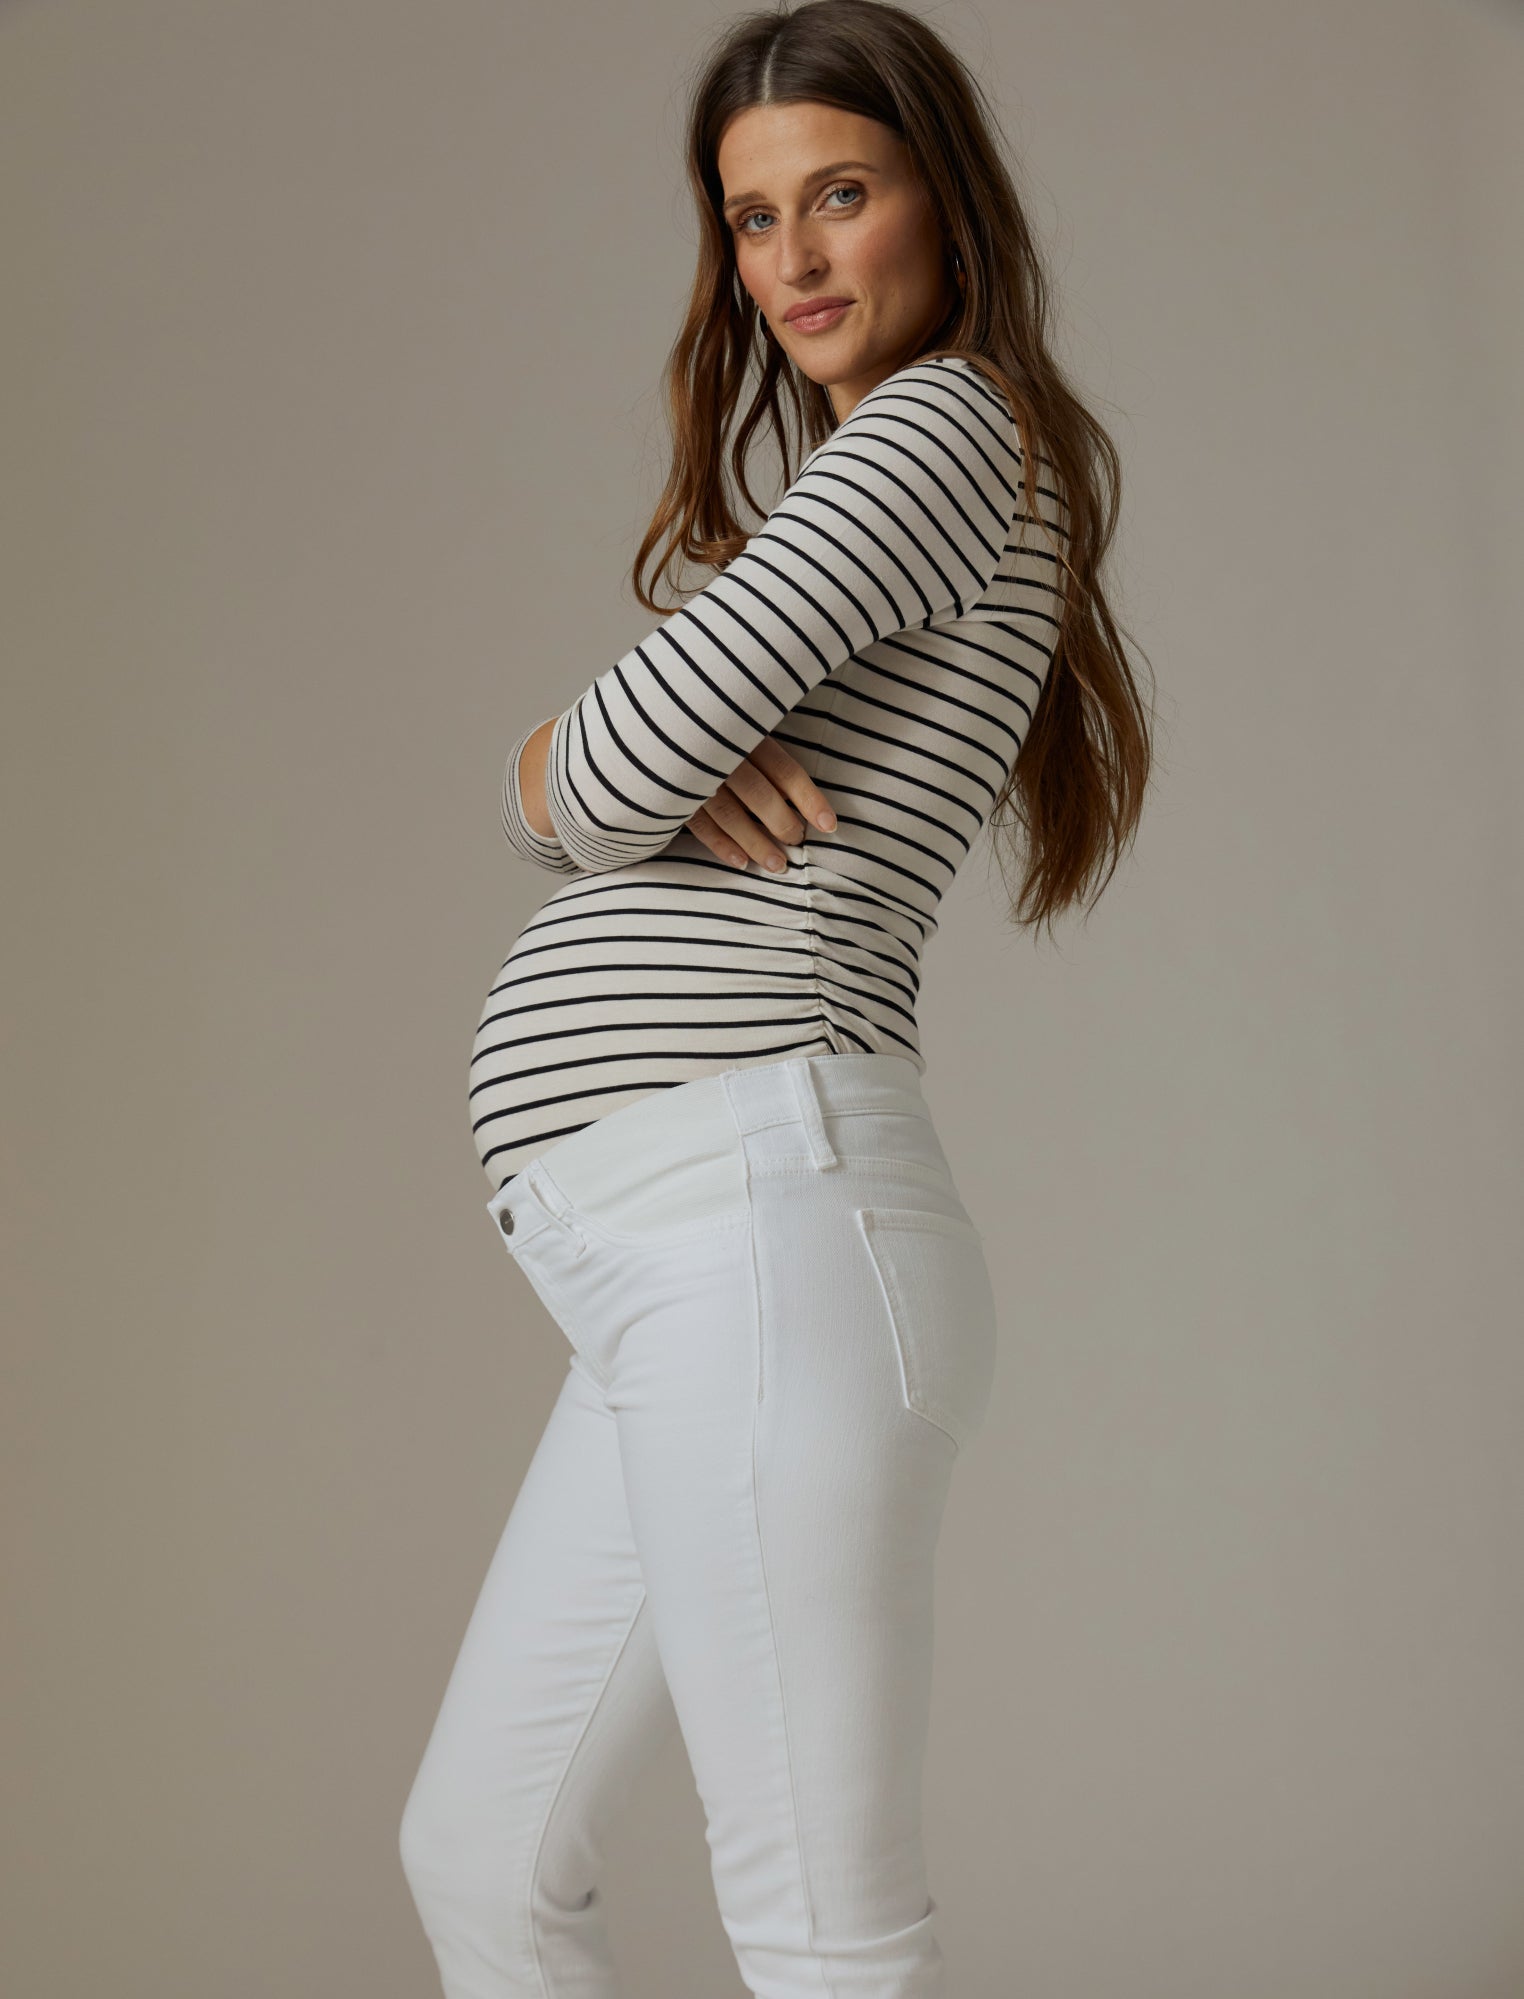 Paige Brigitte Maternity Jeans Size 29 | eBay